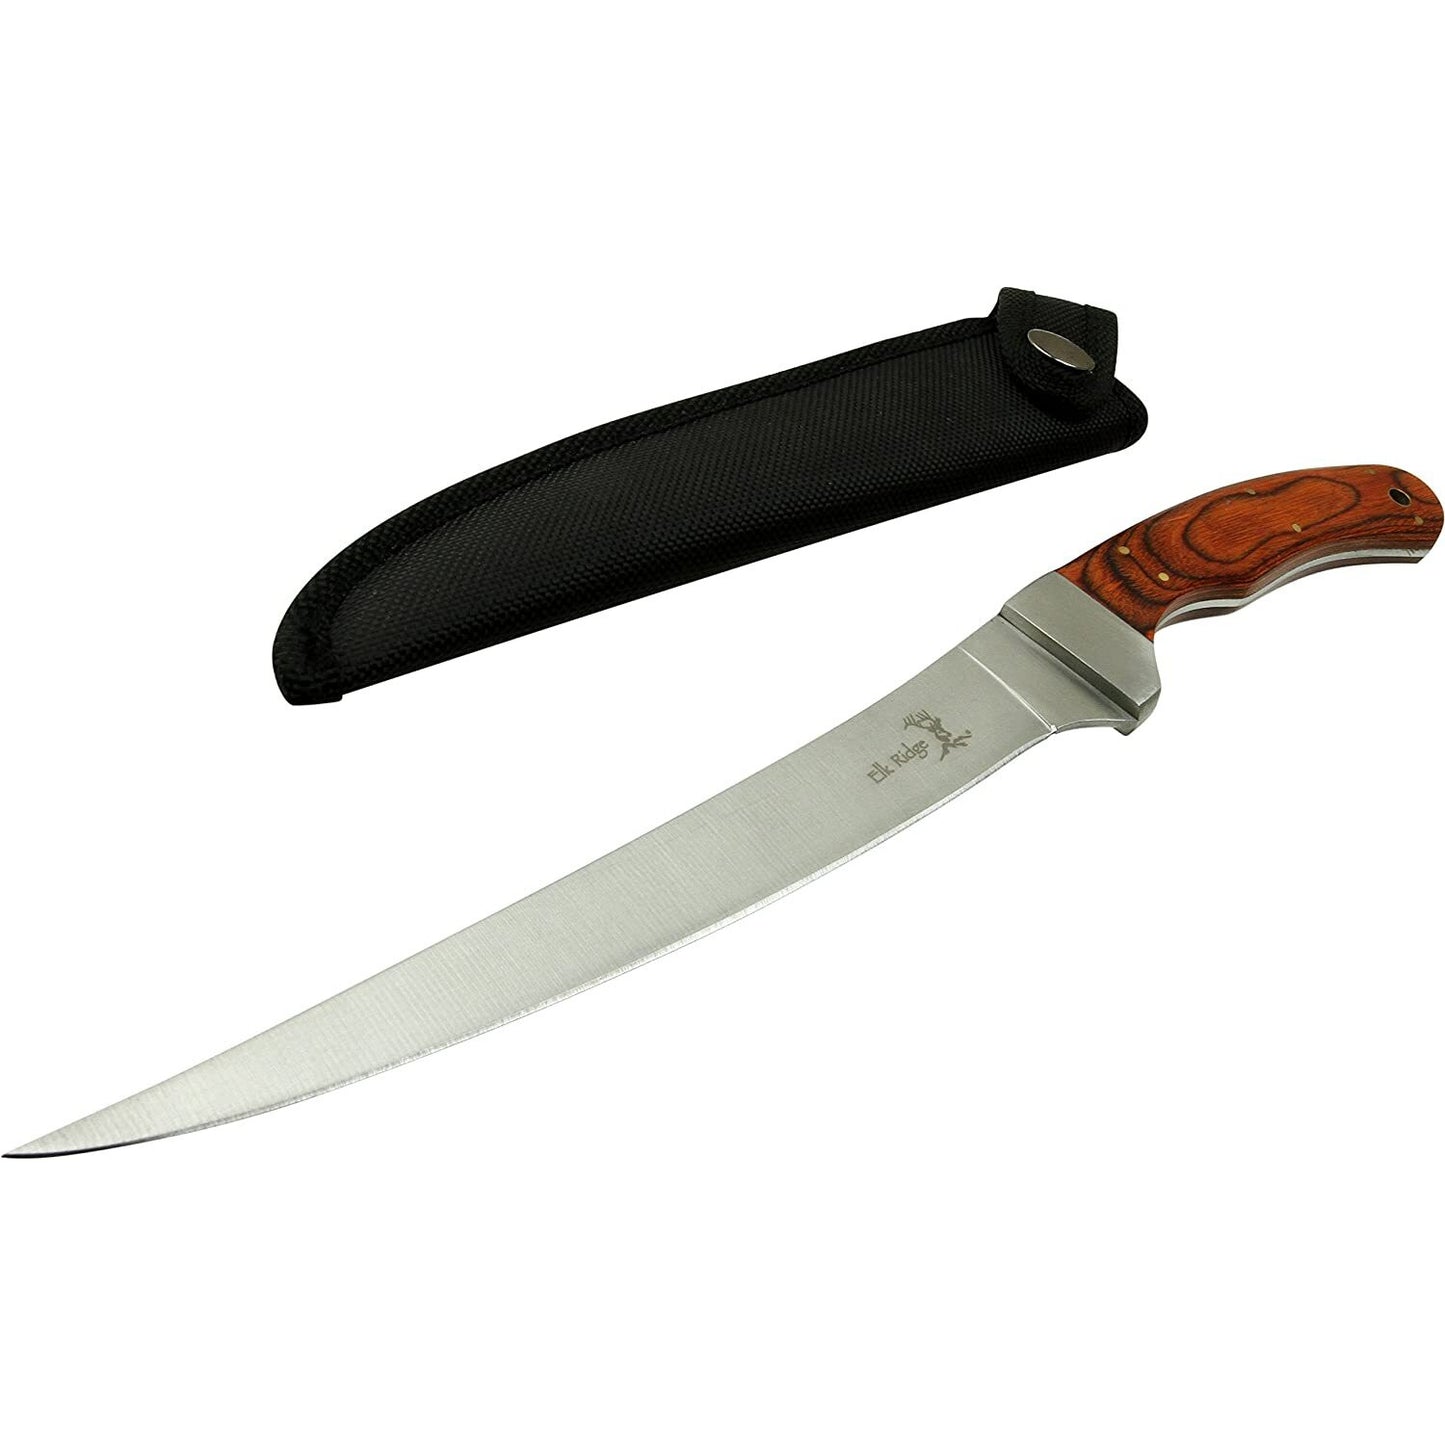 Elk Ridge Elk Ridge Fillet Knife With Pakkawood Handle - 12.25 Inch Overall #er-028 Gray